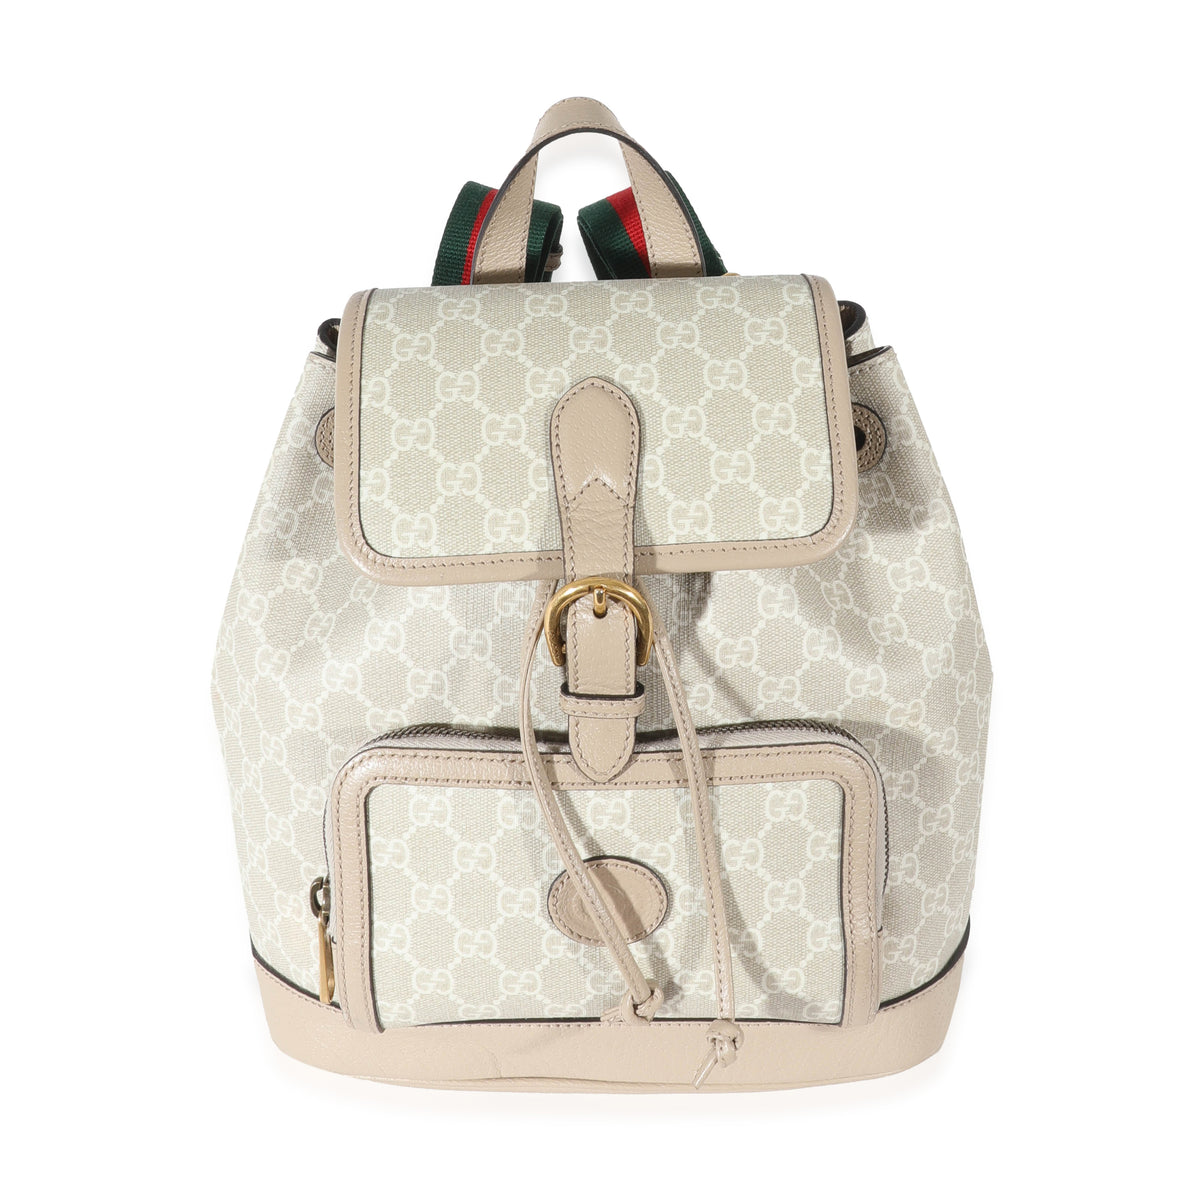 Gucci Beige White GG Supreme Canvas Interlocking G Backpack